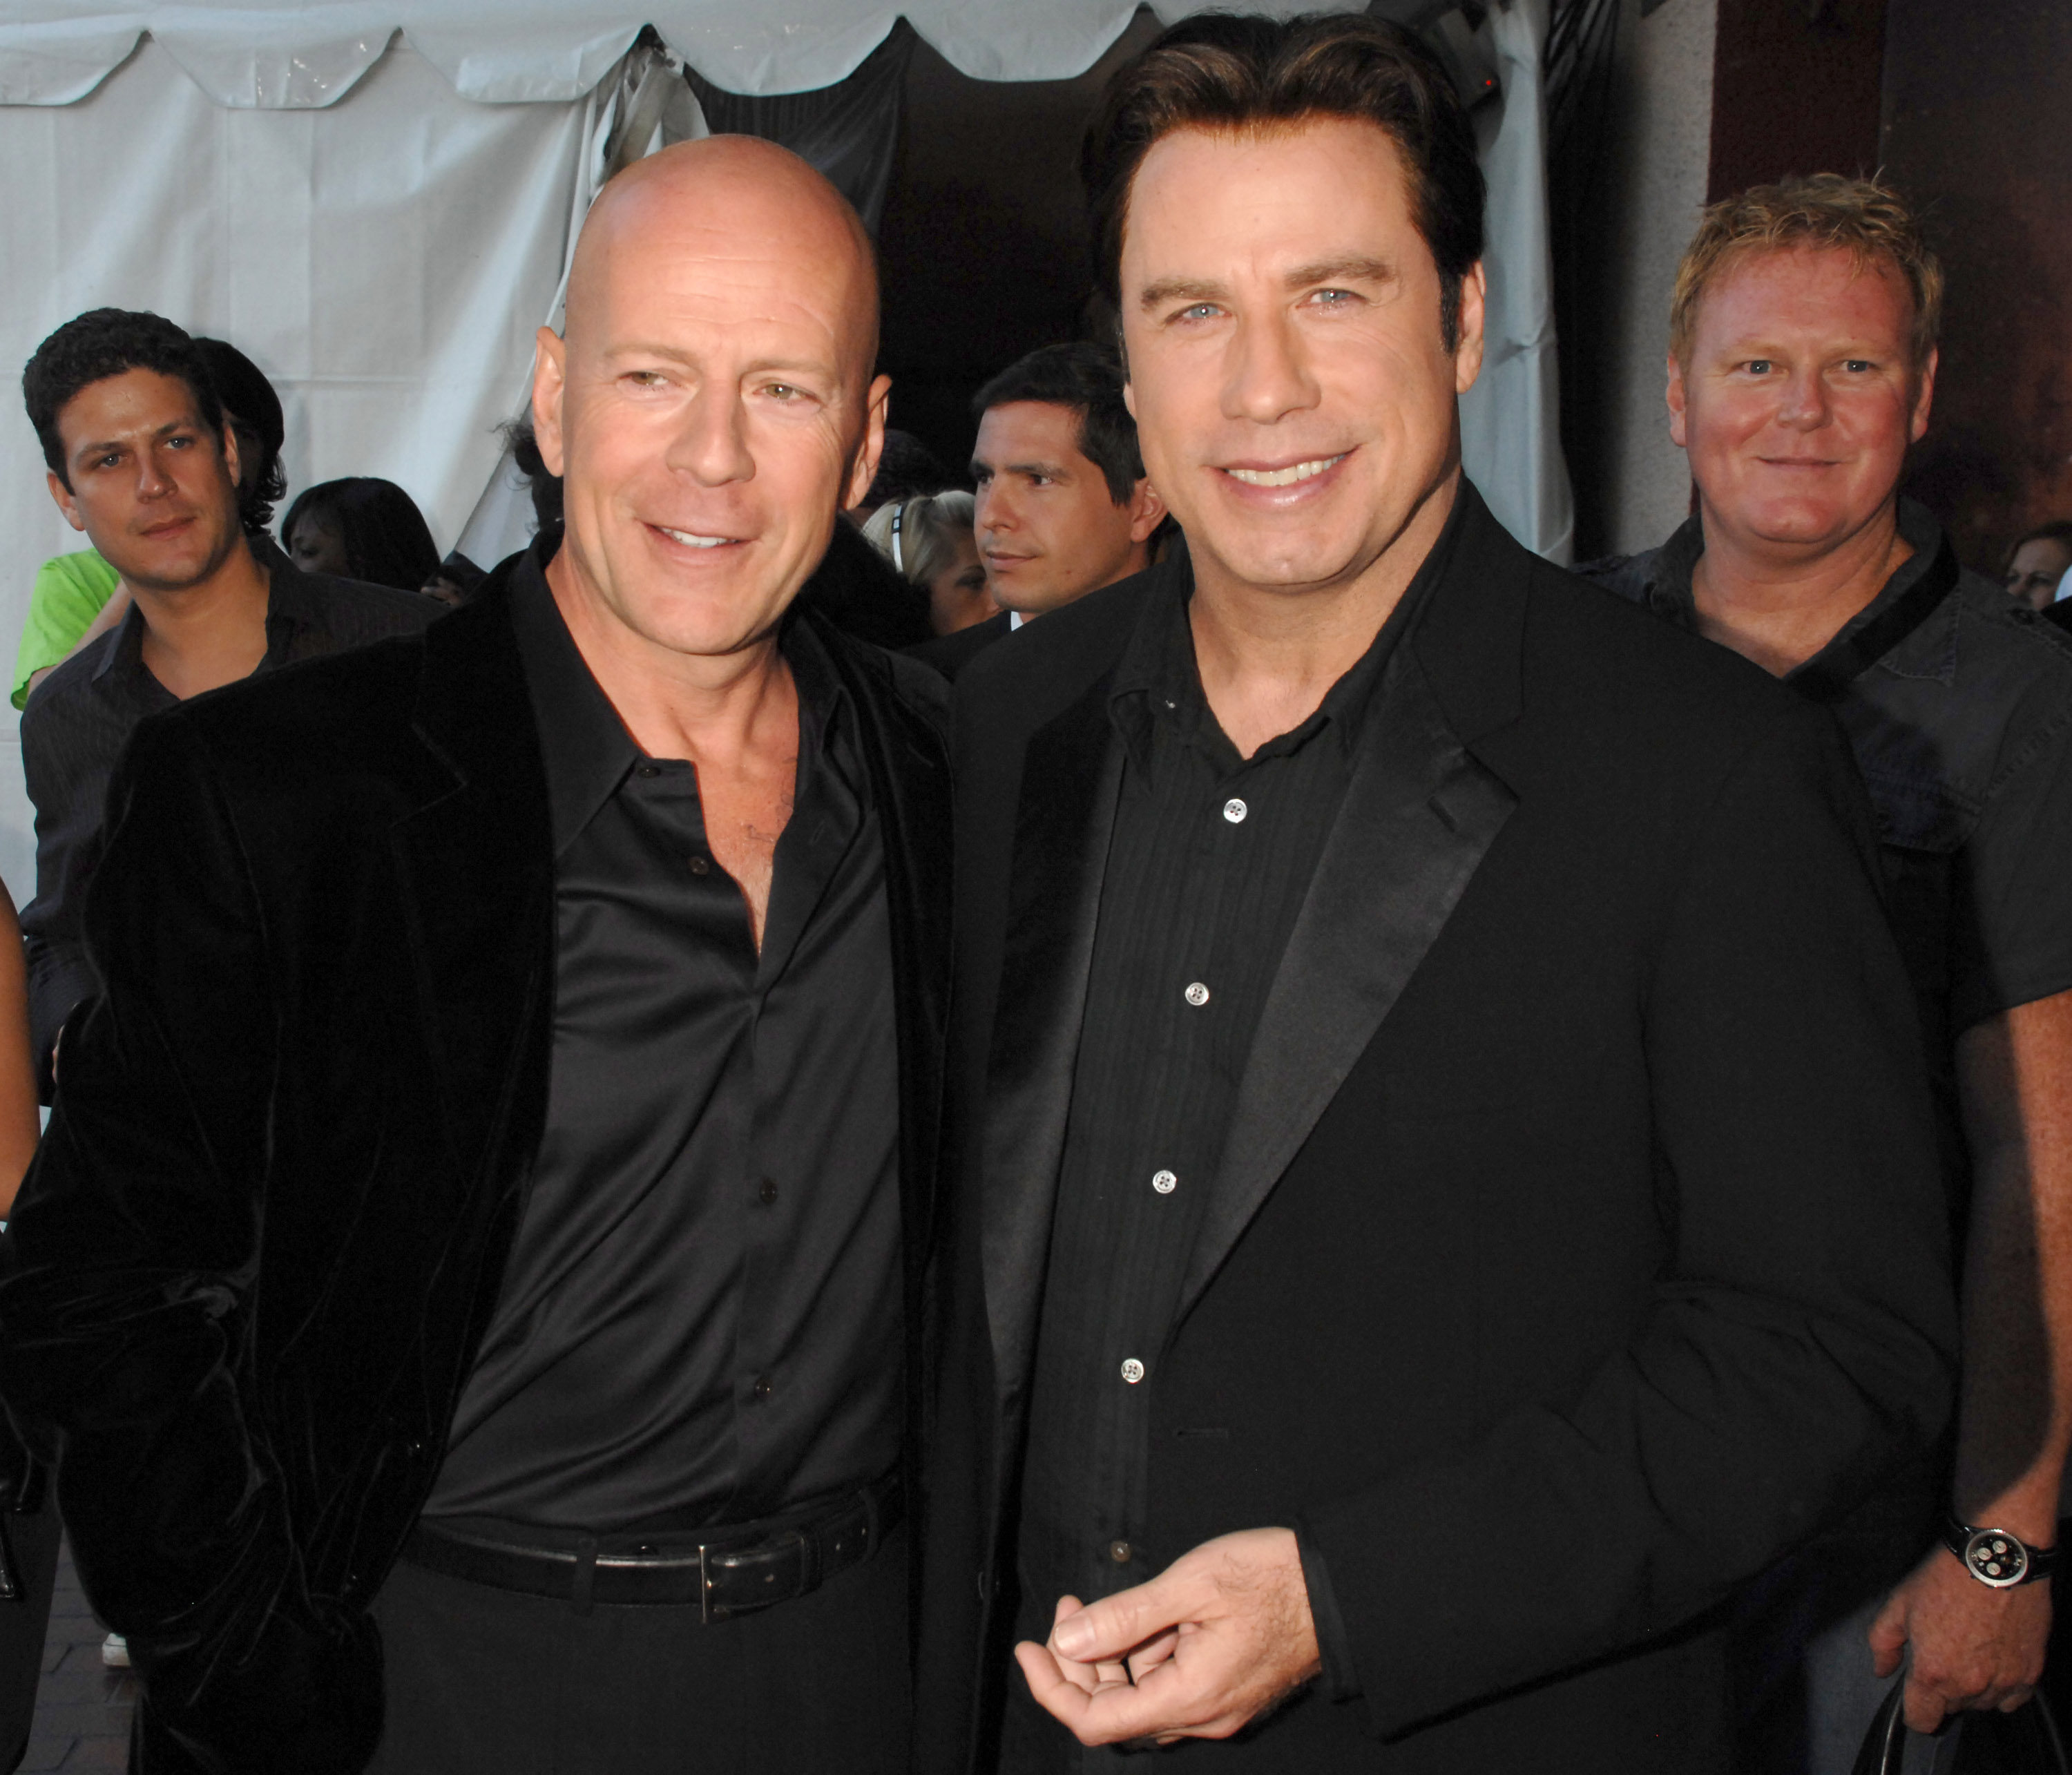 Bruce Willis and John Travolta